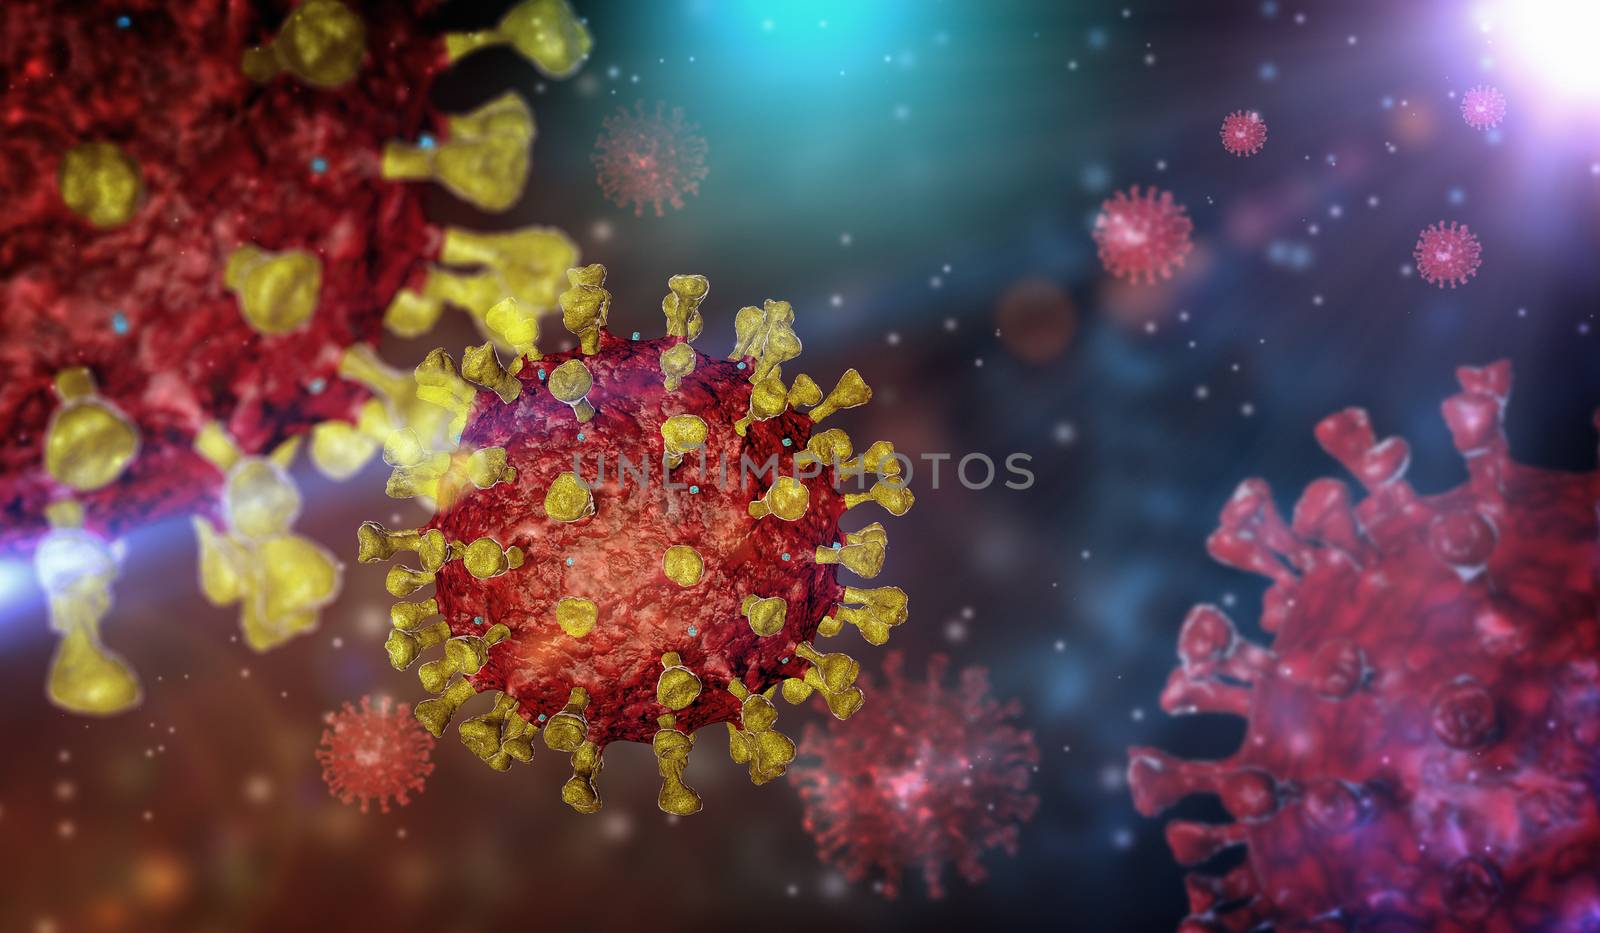 3D rendering of virus on blue and red background. Coronavirus COVID-19 microscopic virus corona virus disease 3d illustration. 